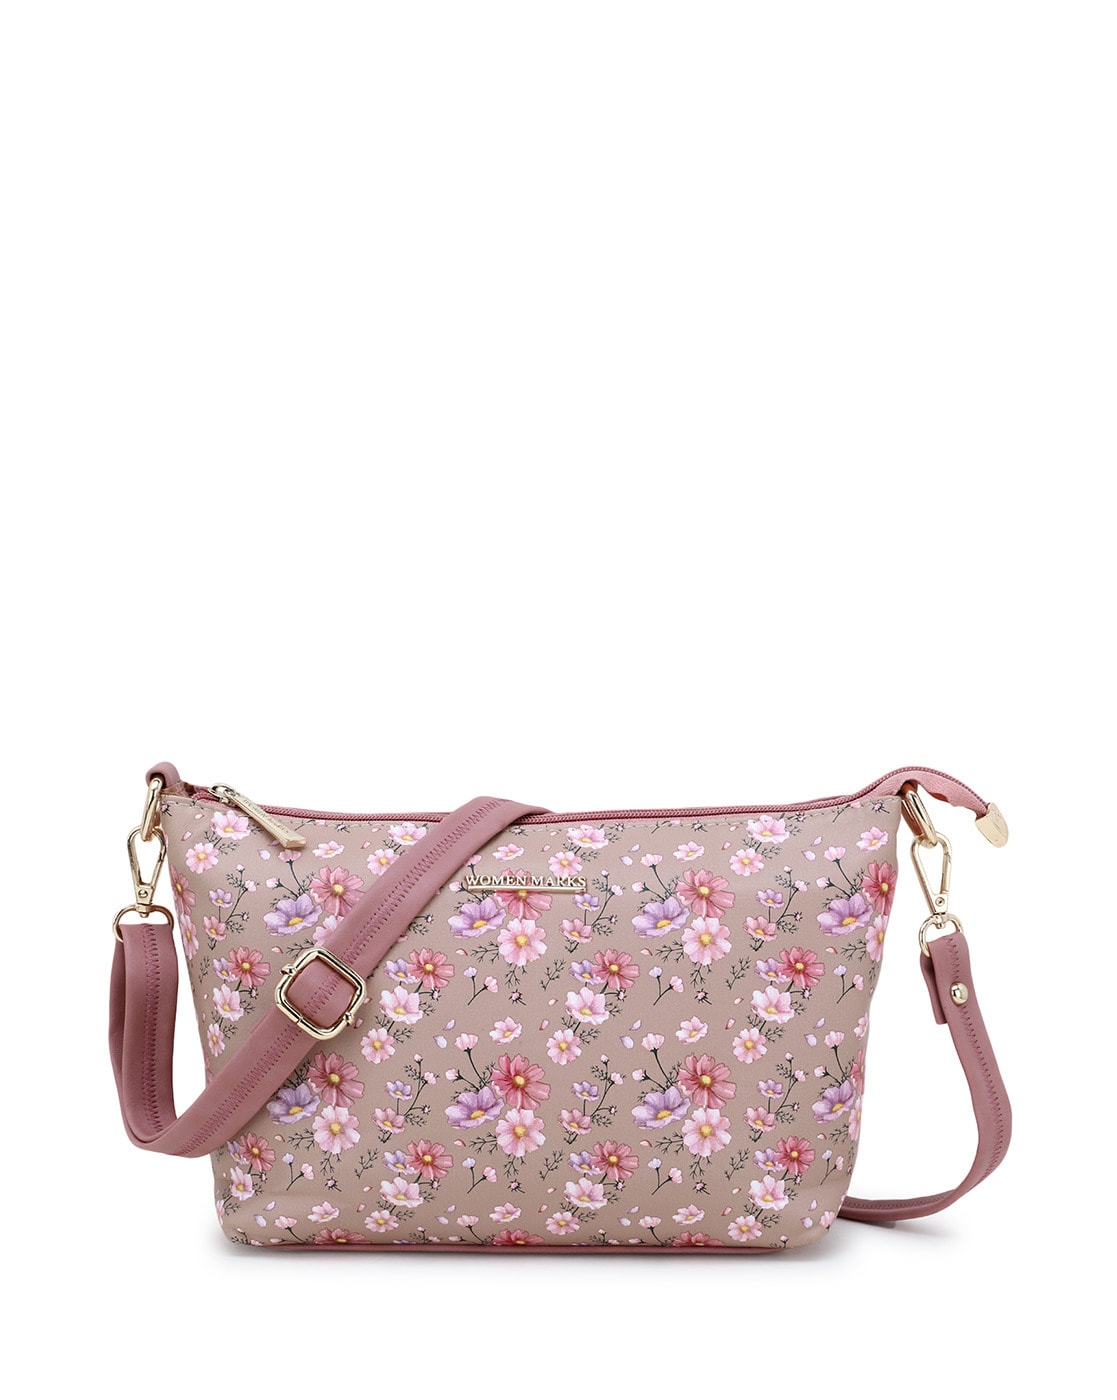 Cath Kidston x Disney Bambi Handbag | Disney Store